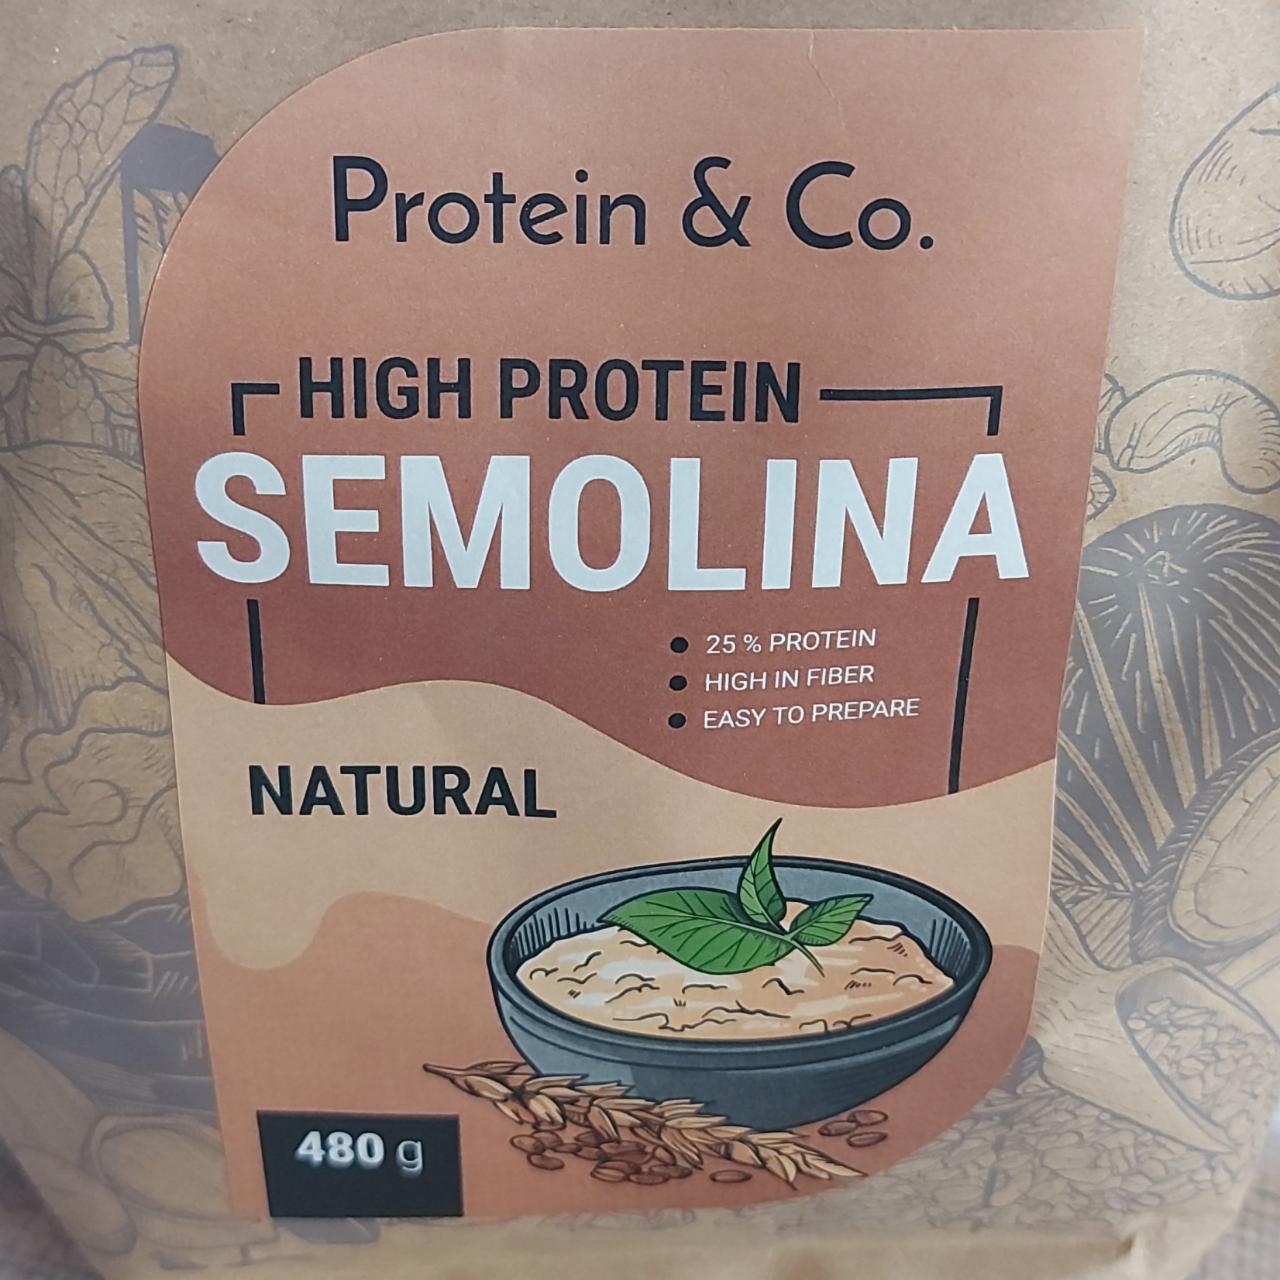 Fotografie - High Protein Semolina Natural Protein & Co.